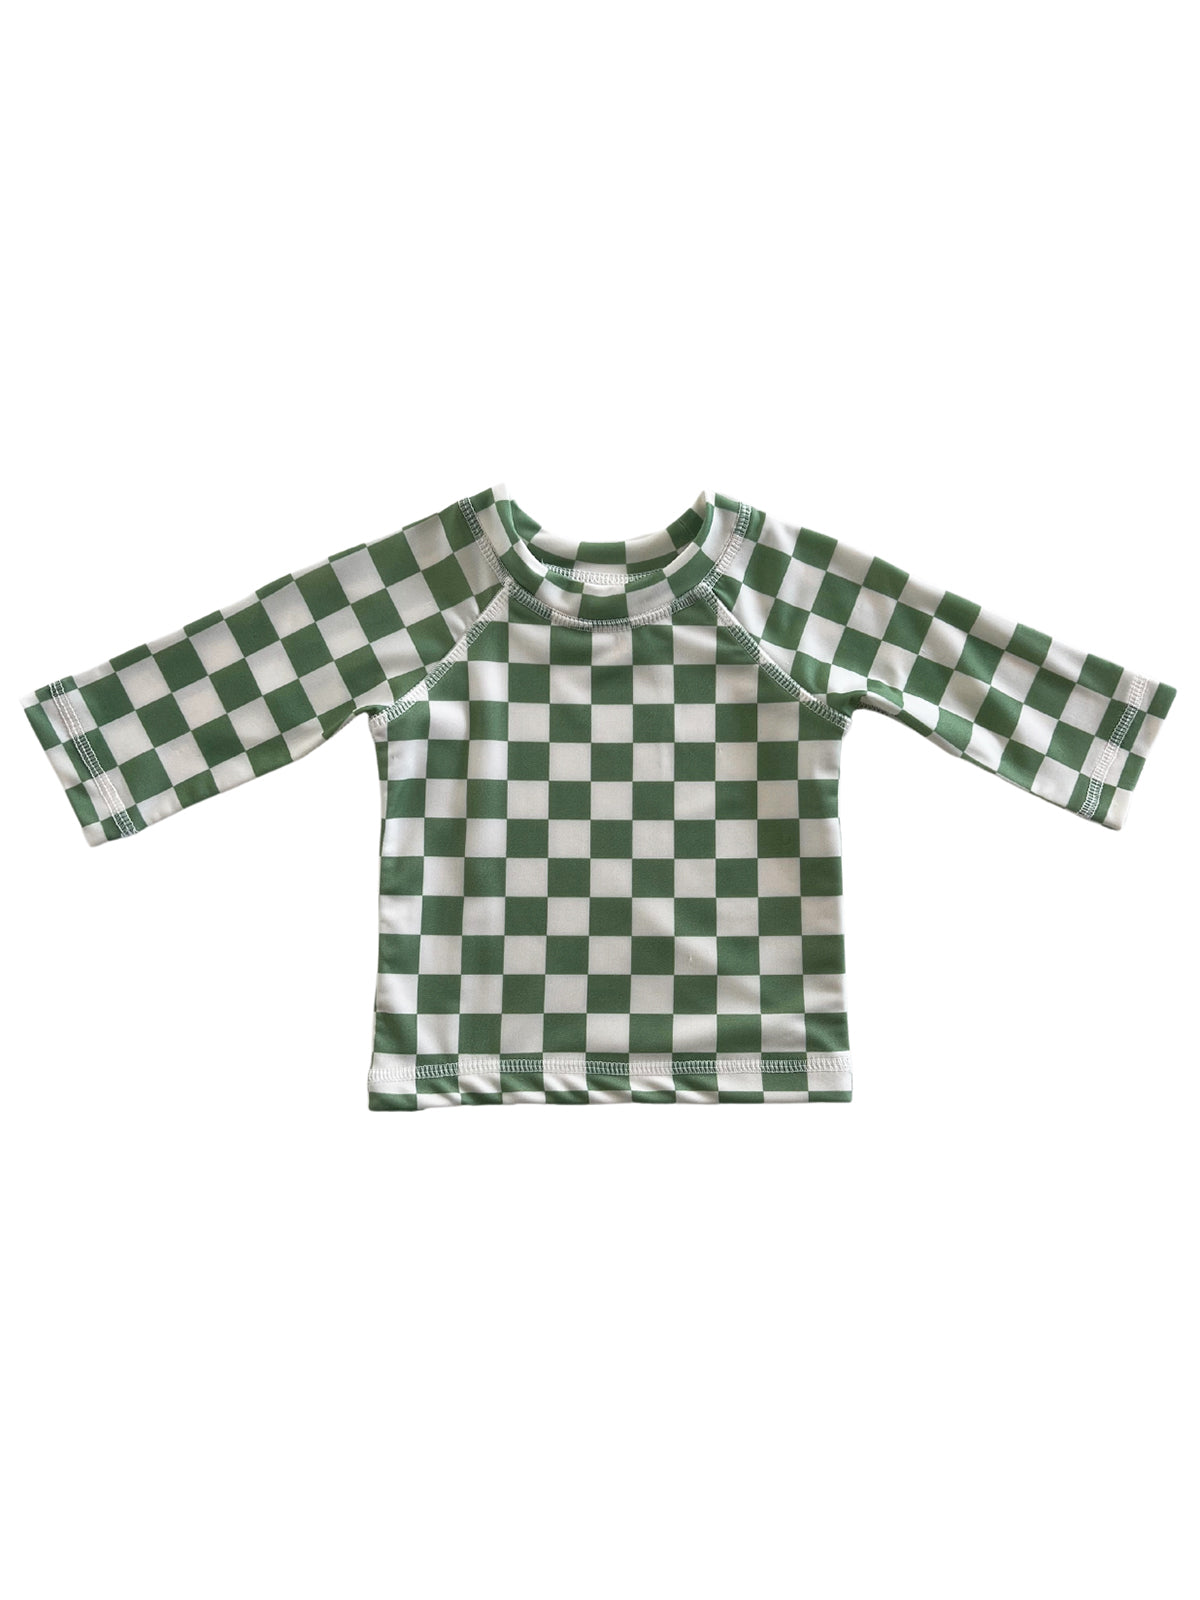 Lime Checkerboard / Maui Rashguard / UPF 50+